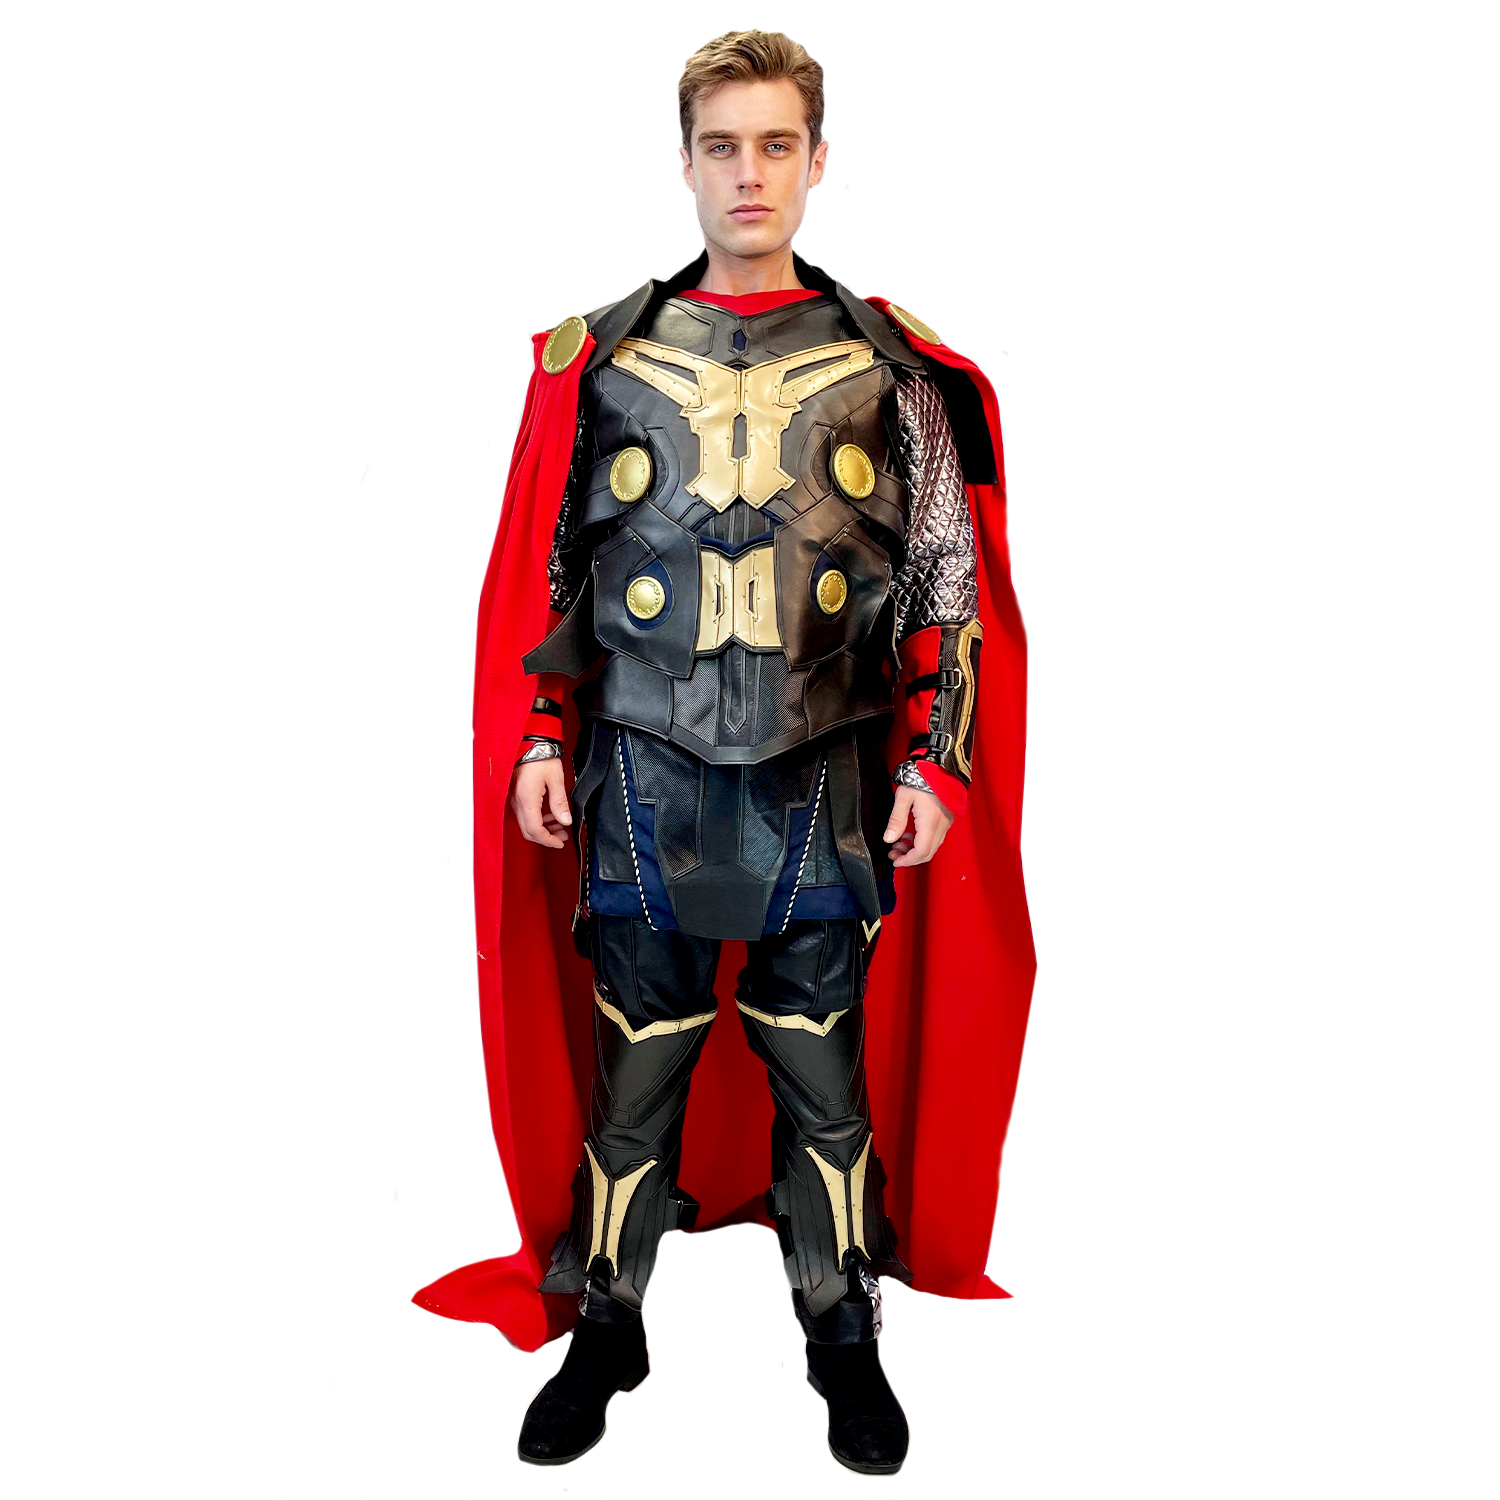 Thor: The Dark World Cosplay Adult Costume